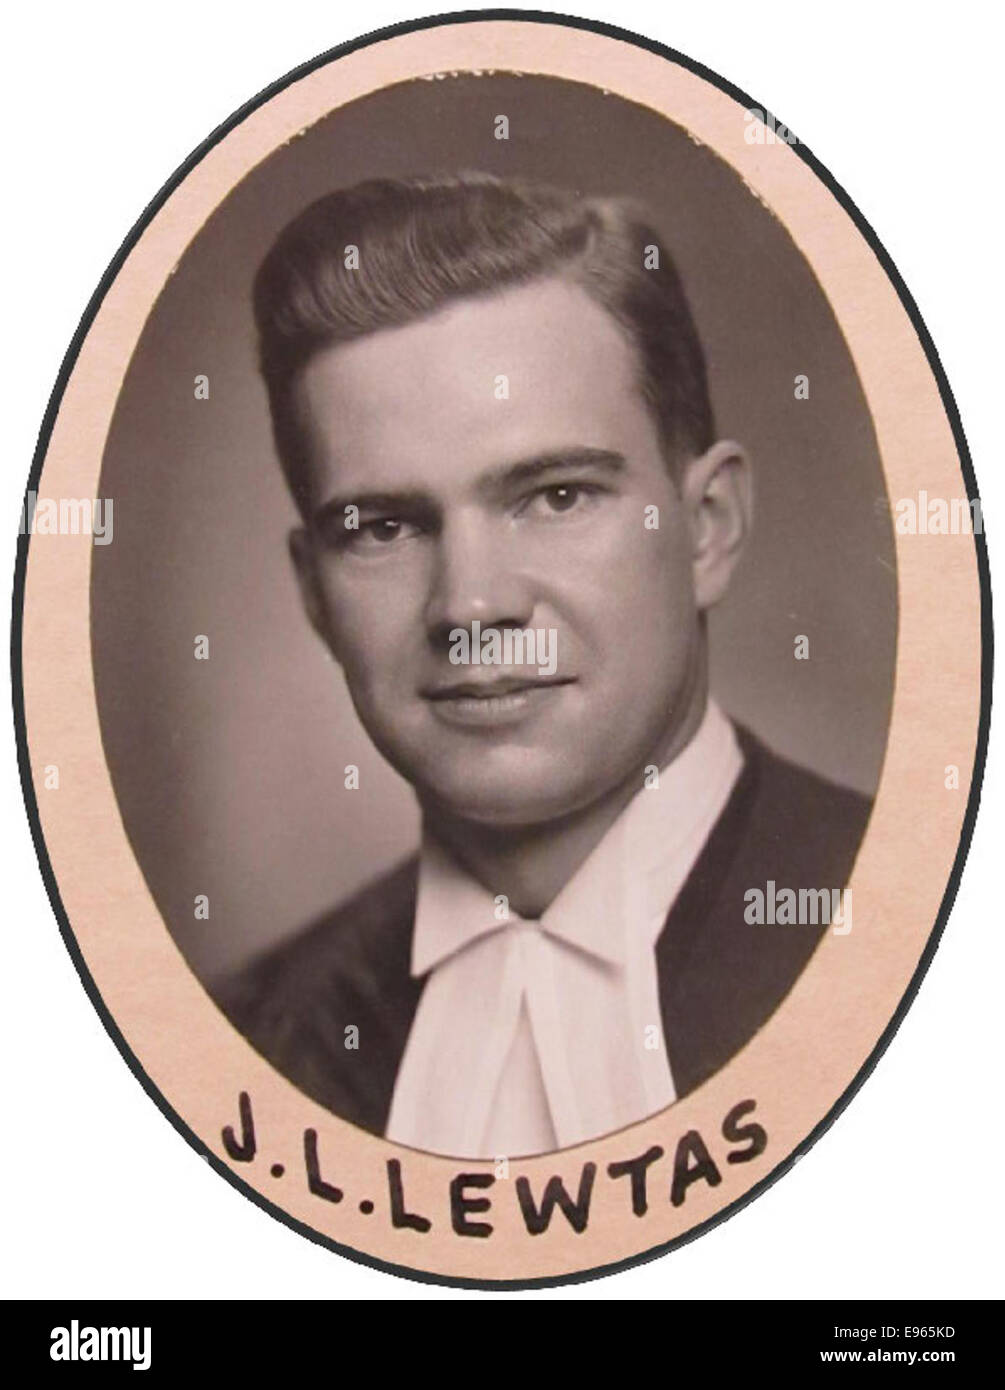 Photograph of James Lawrence Lewtas (1922-1975) 14672661407 o Stock Photo